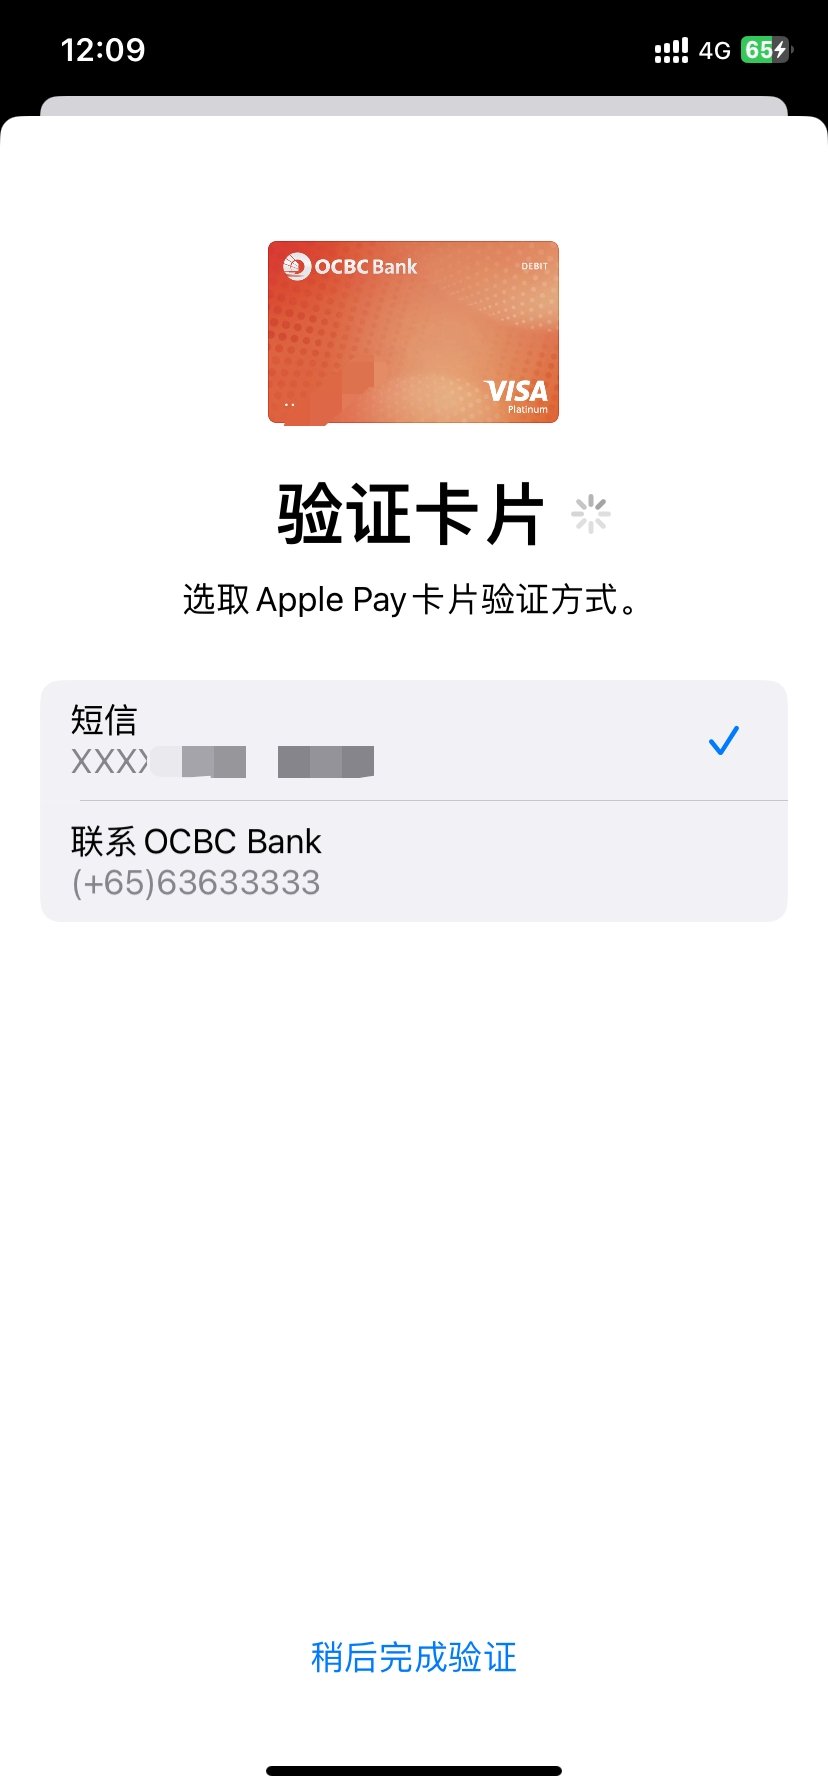 OCBC BANK  debit cardѰApple Pay